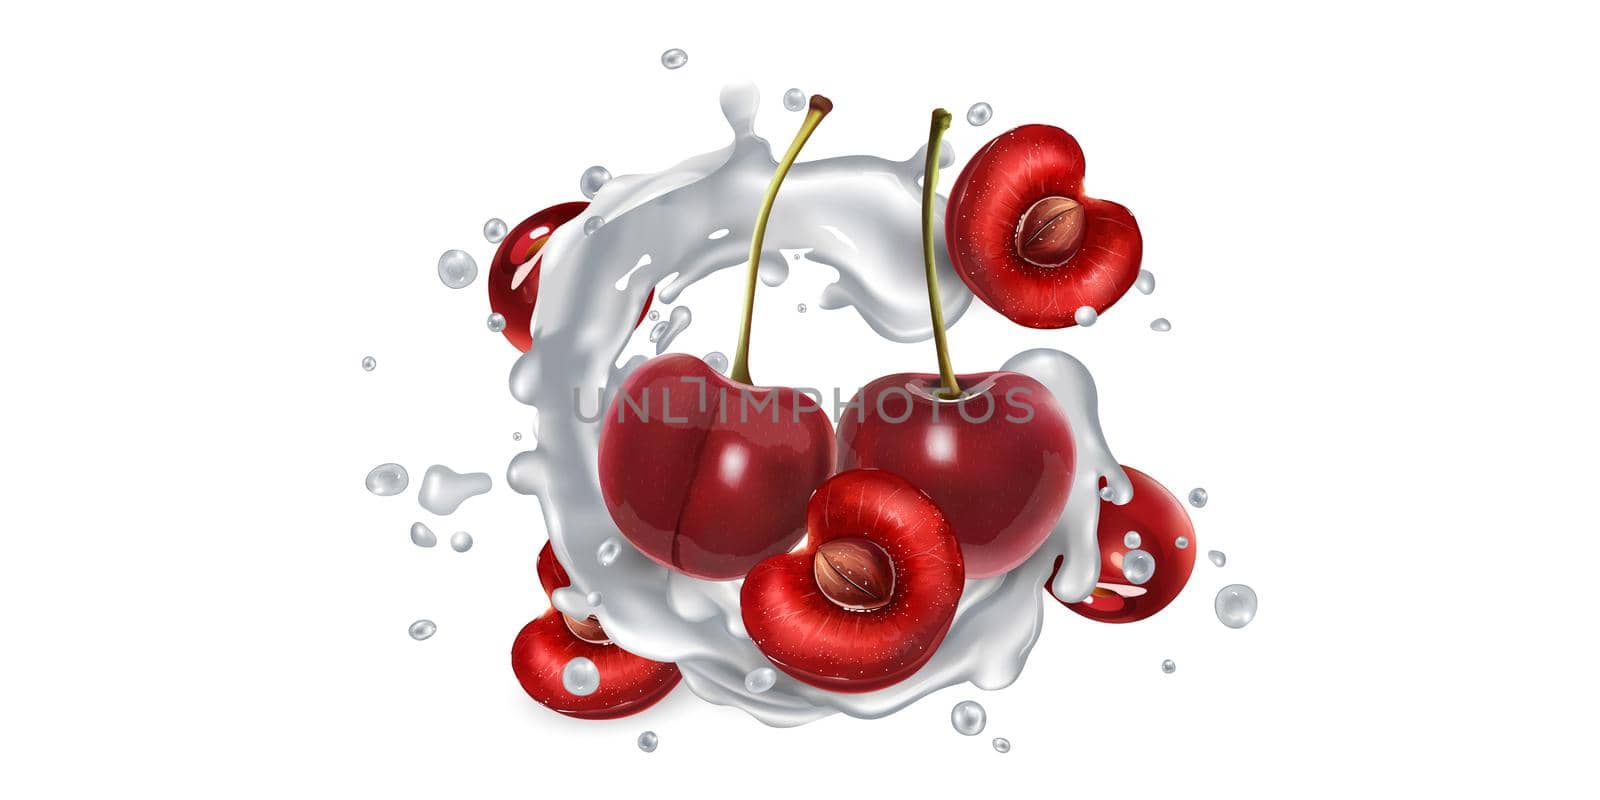 Cherries in splashes of yogurt or milk. by ConceptCafe